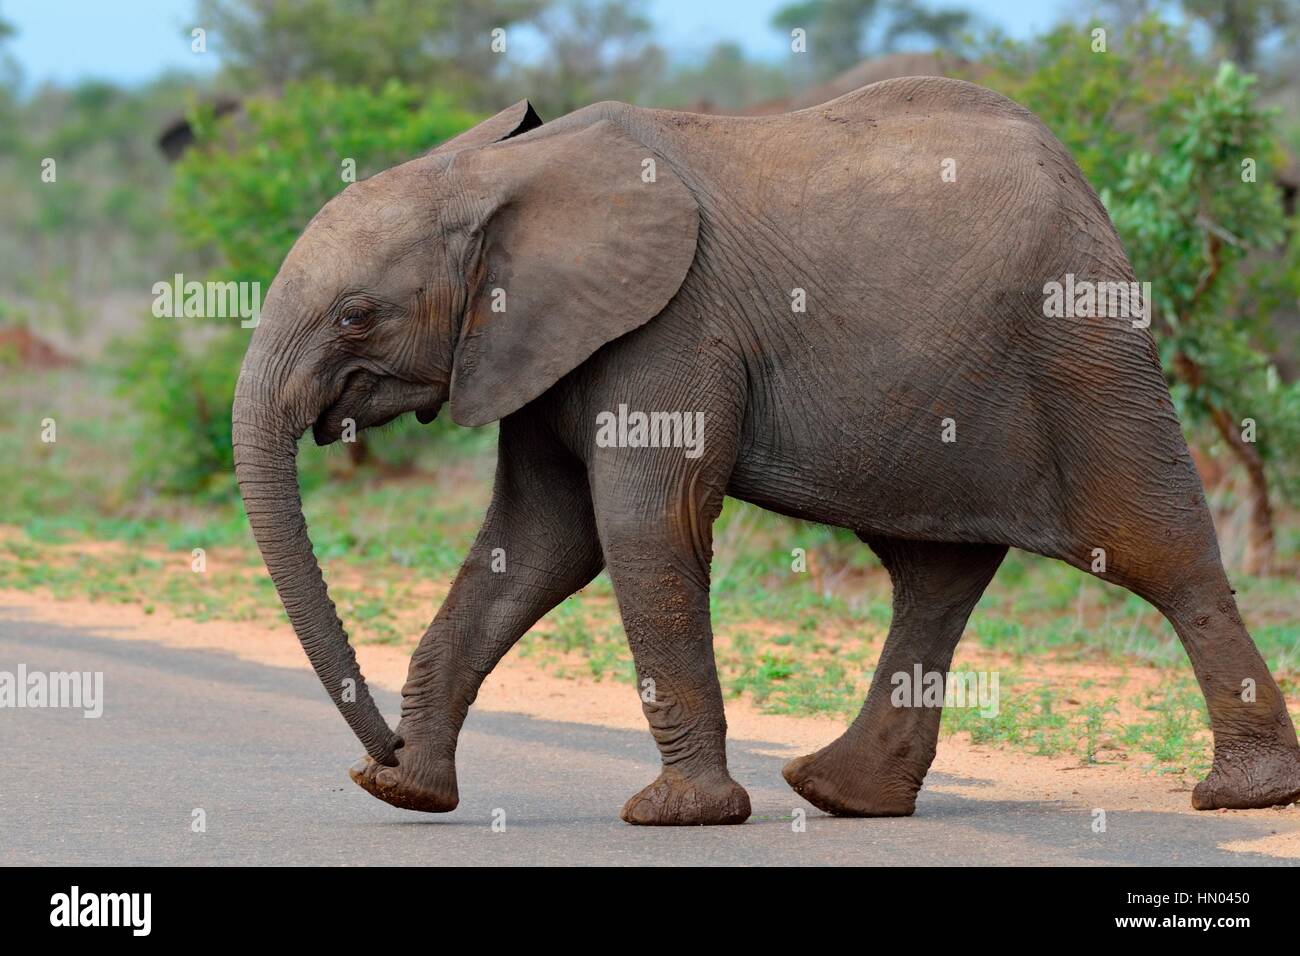 Afrikanischer Bush Elefant (Loxodonta Africana) Kalb über eine asphaltierte Straße, Krüger Nationalpark, Südafrika, Afrika Stockfoto